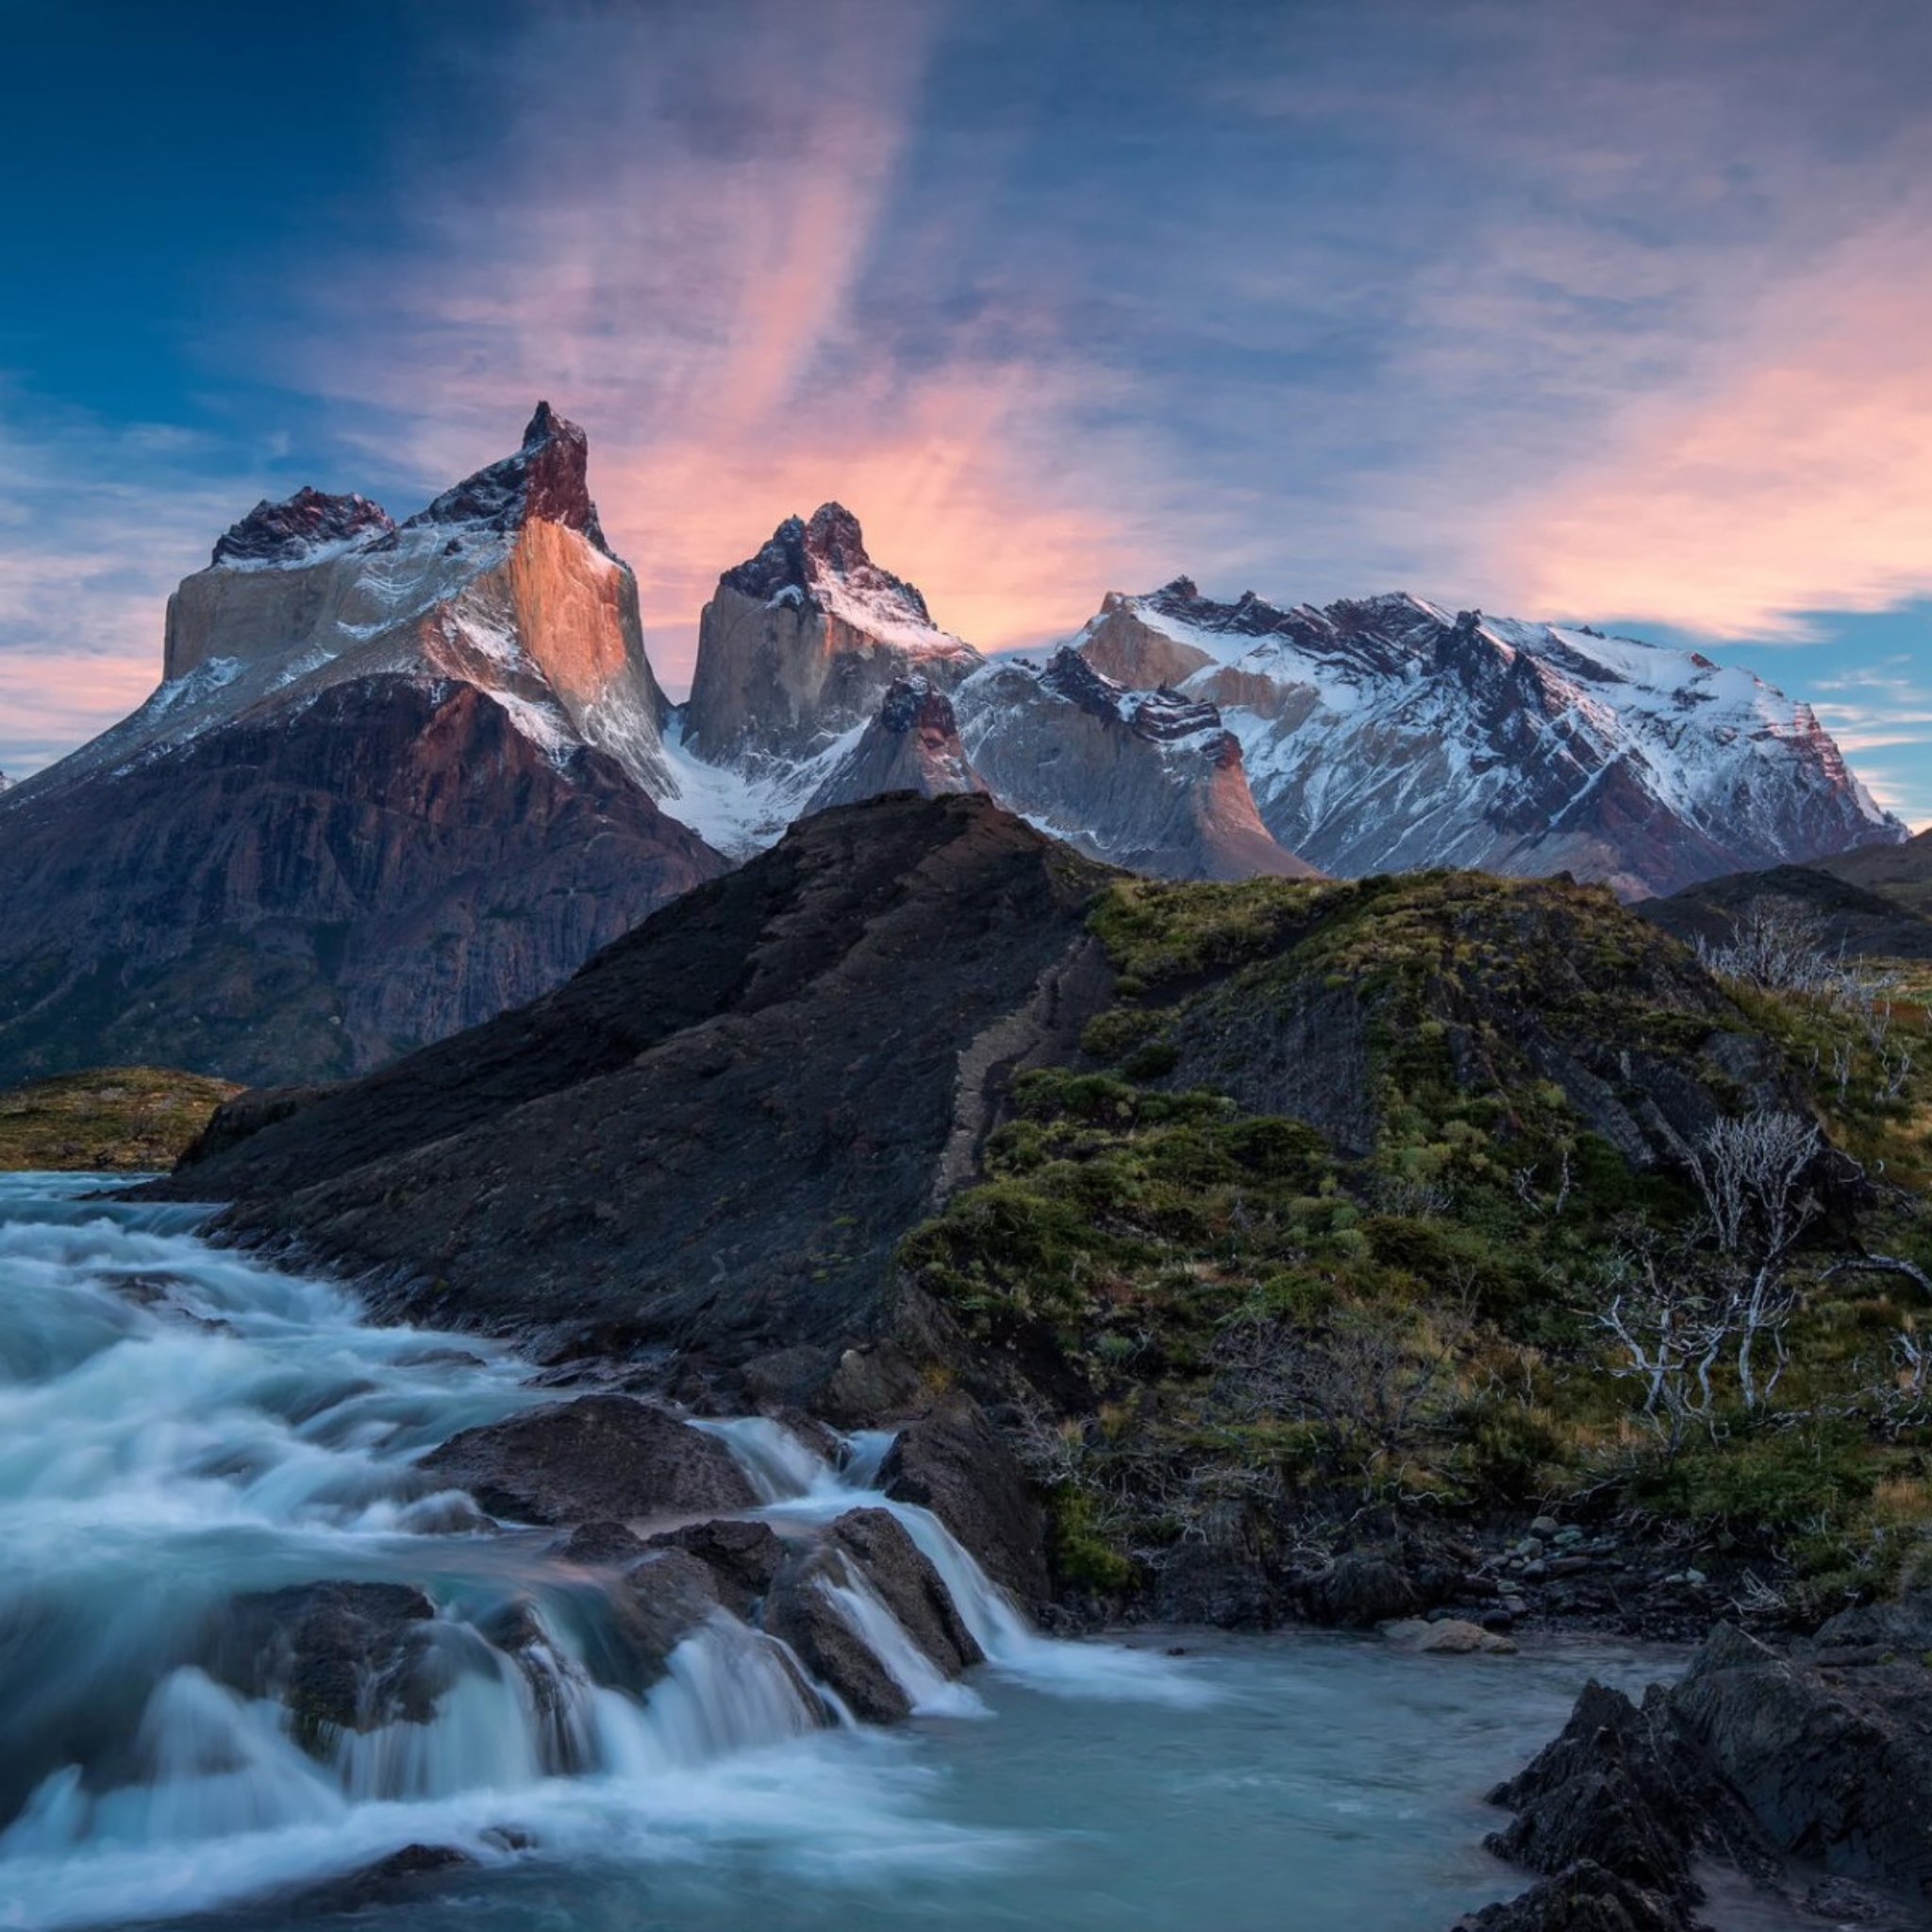 Duopack Torres del Paine: 2 days and 1 night program - Rebel Viajes